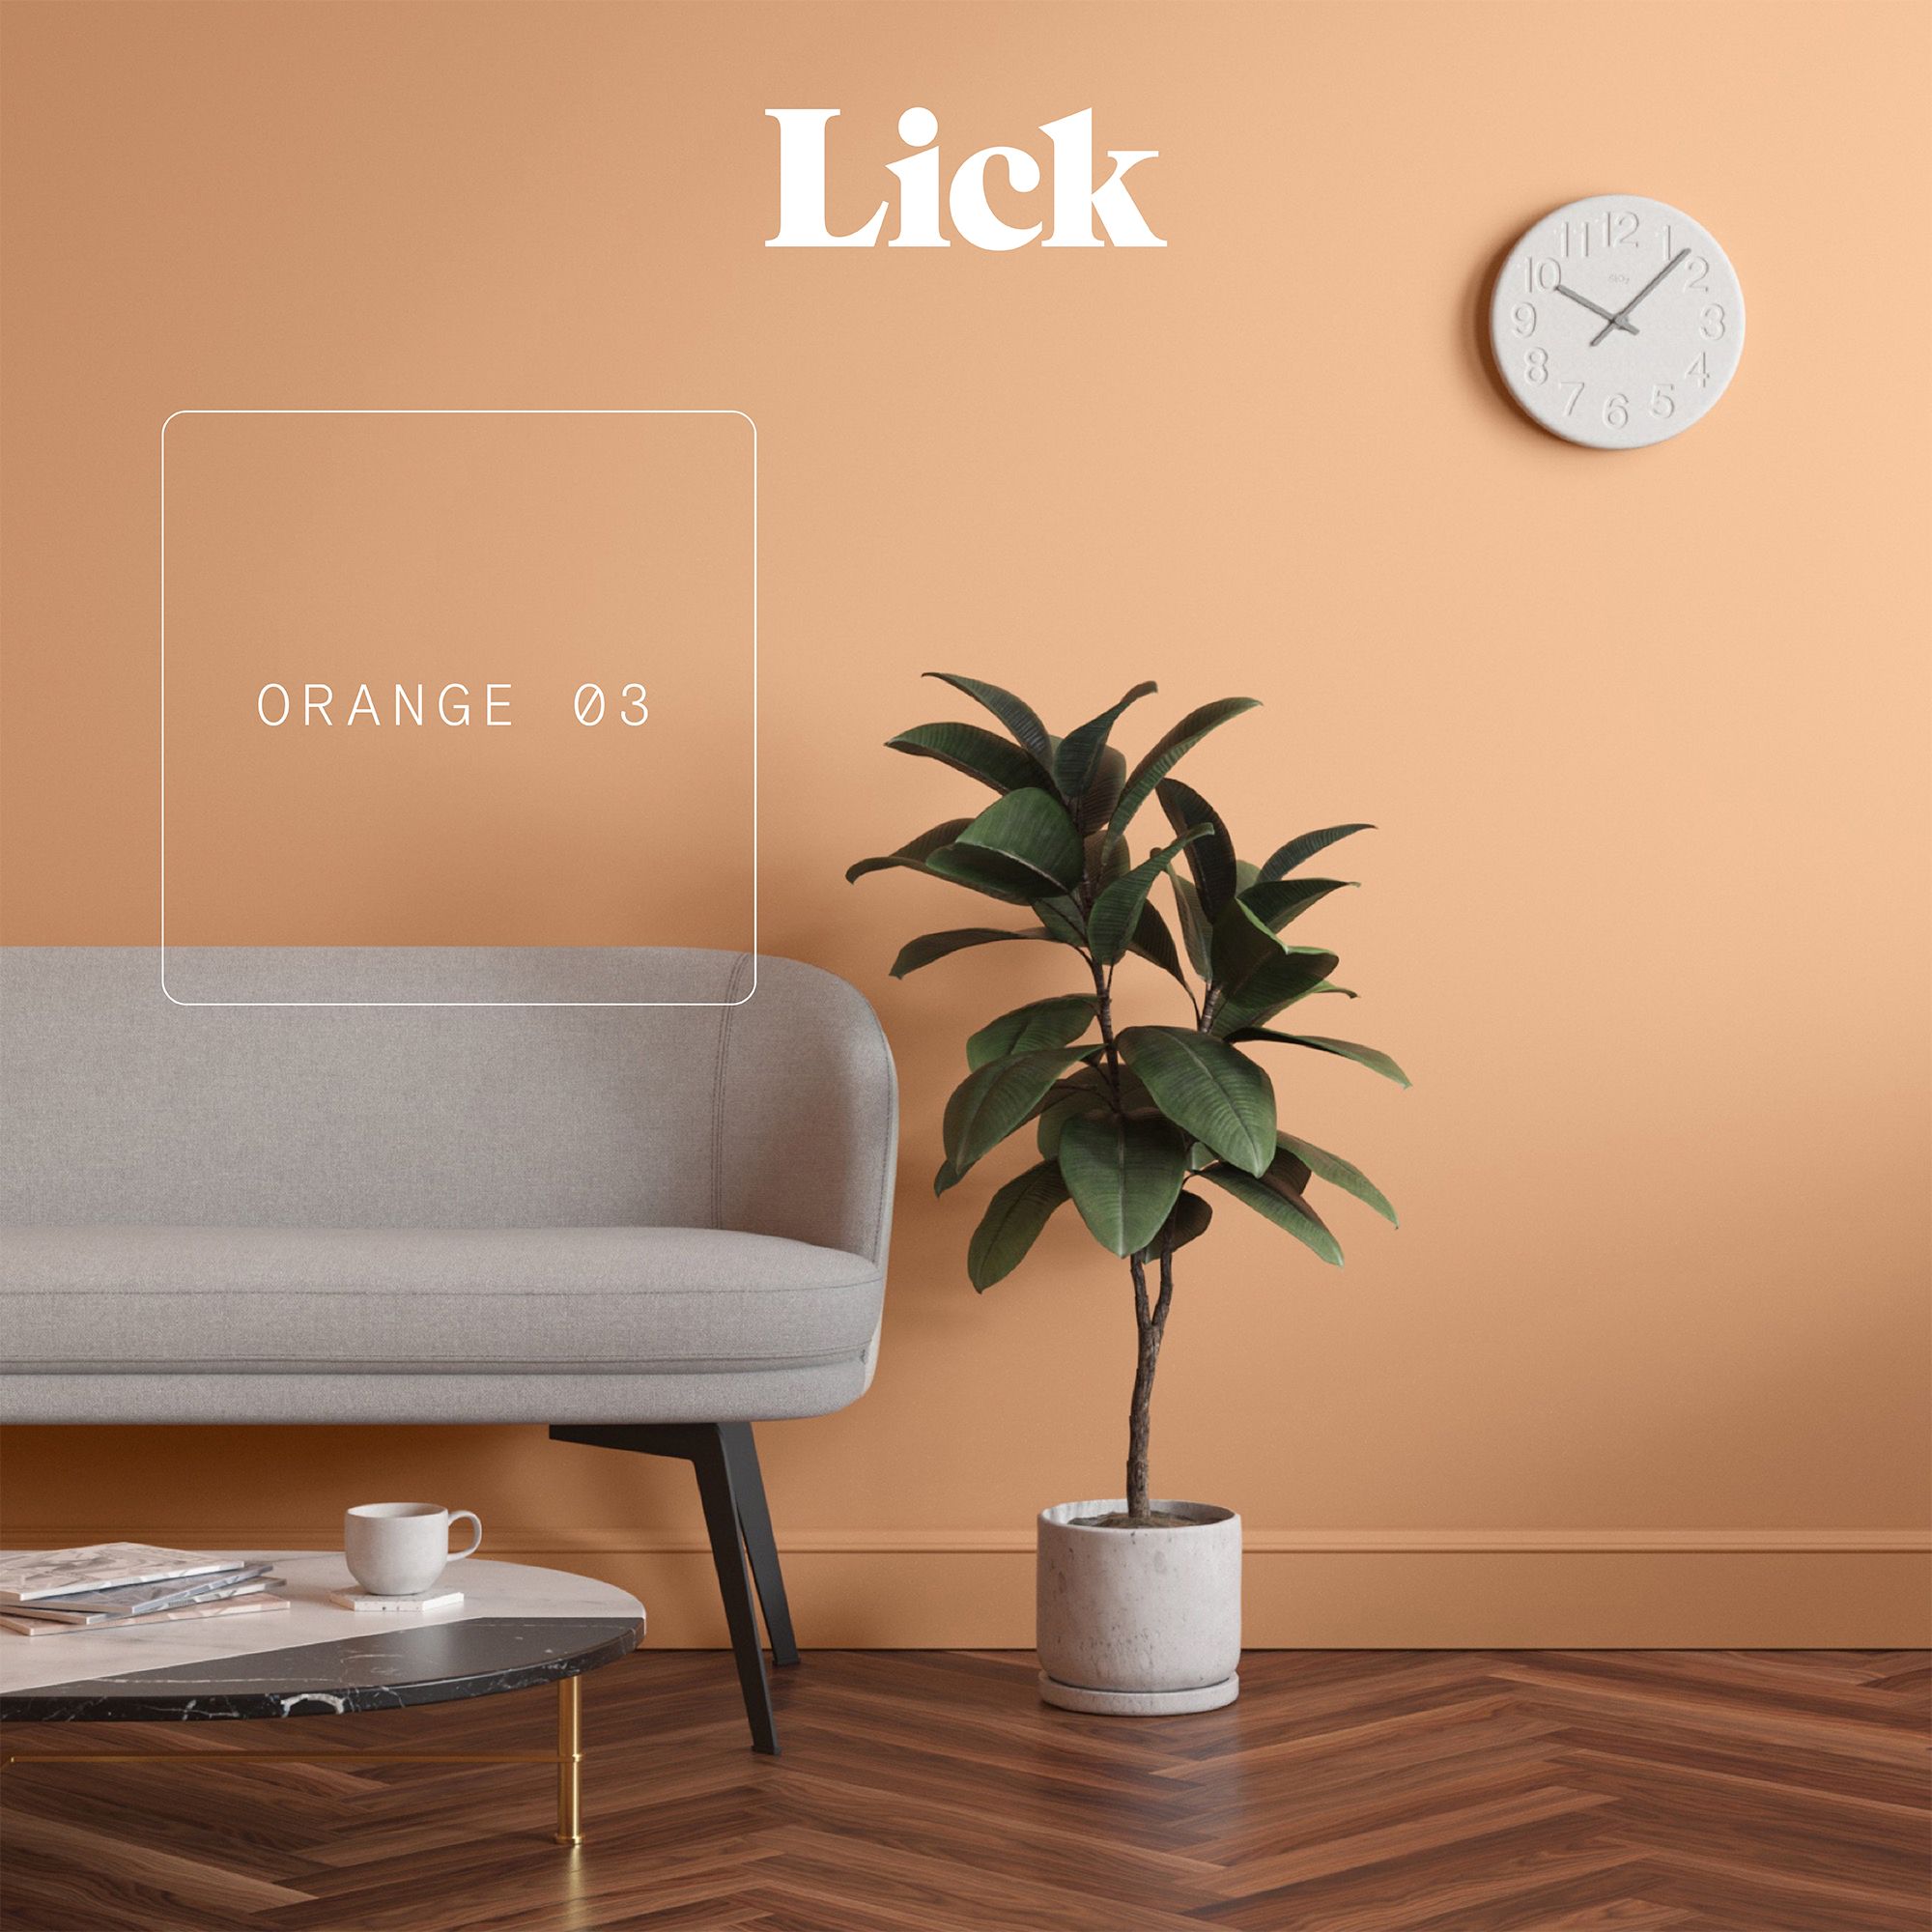 Lick Orange 03 Matt Emulsion paint, 2.5L